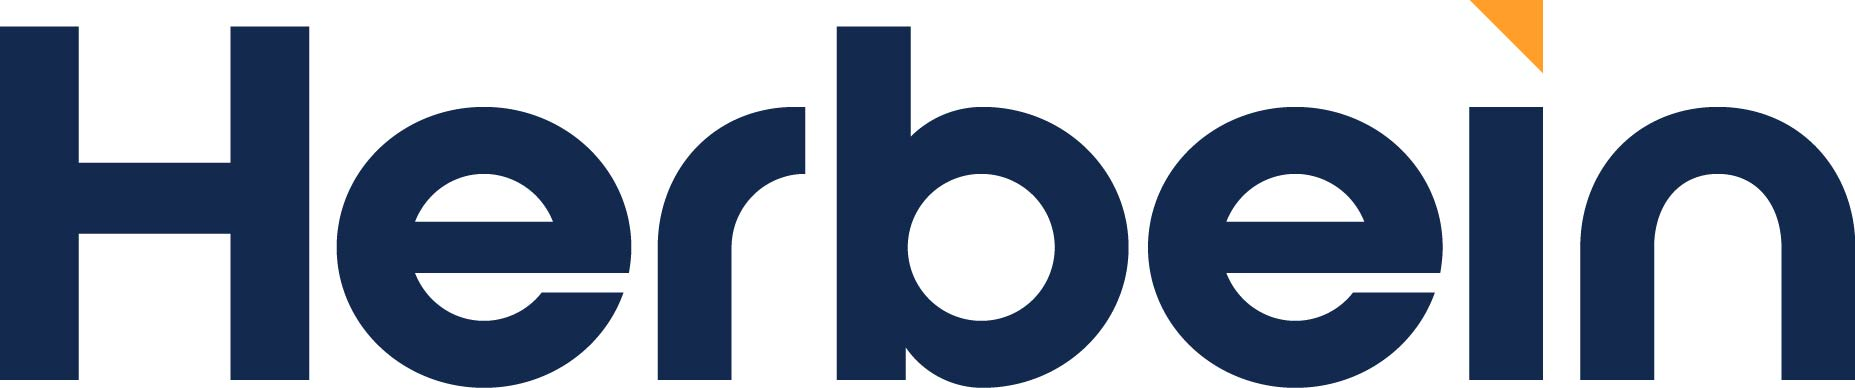 Herbein + Company, Inc. logo